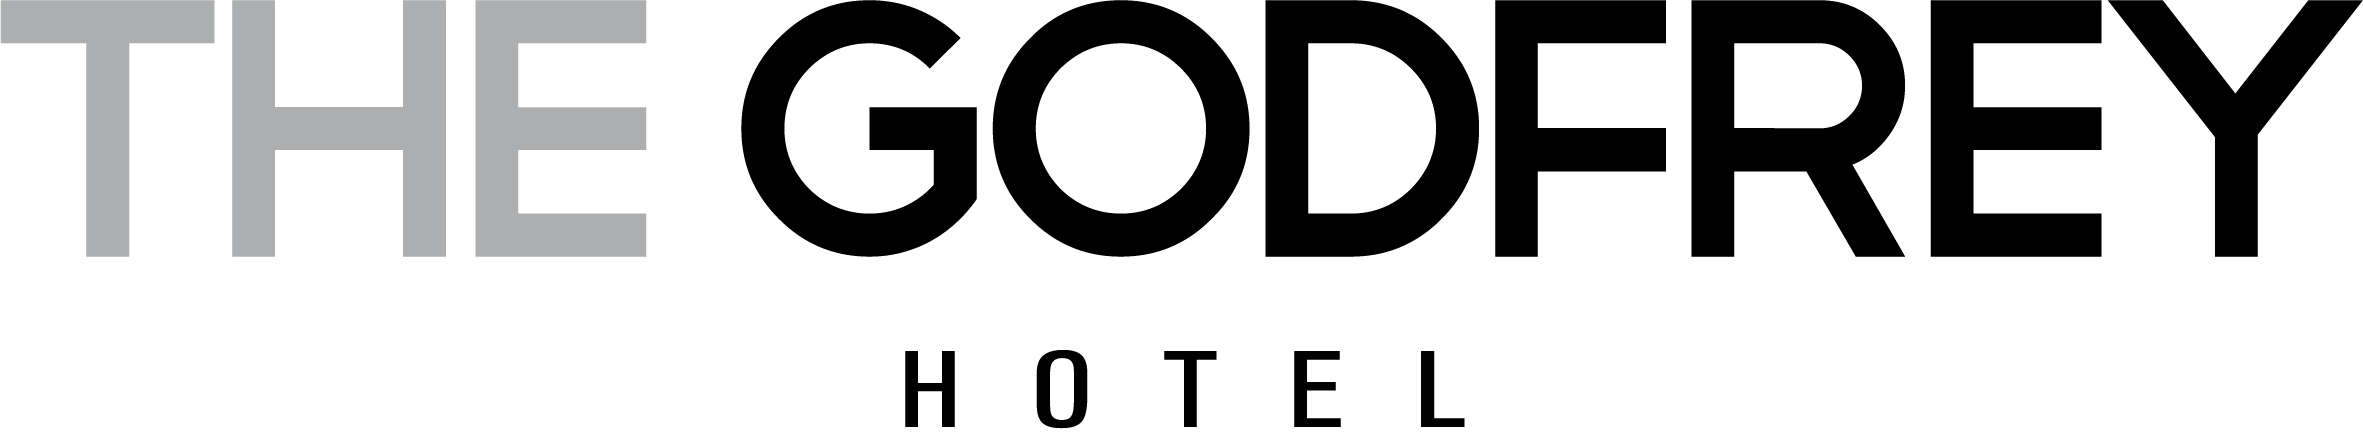 the godfrey hotels logo